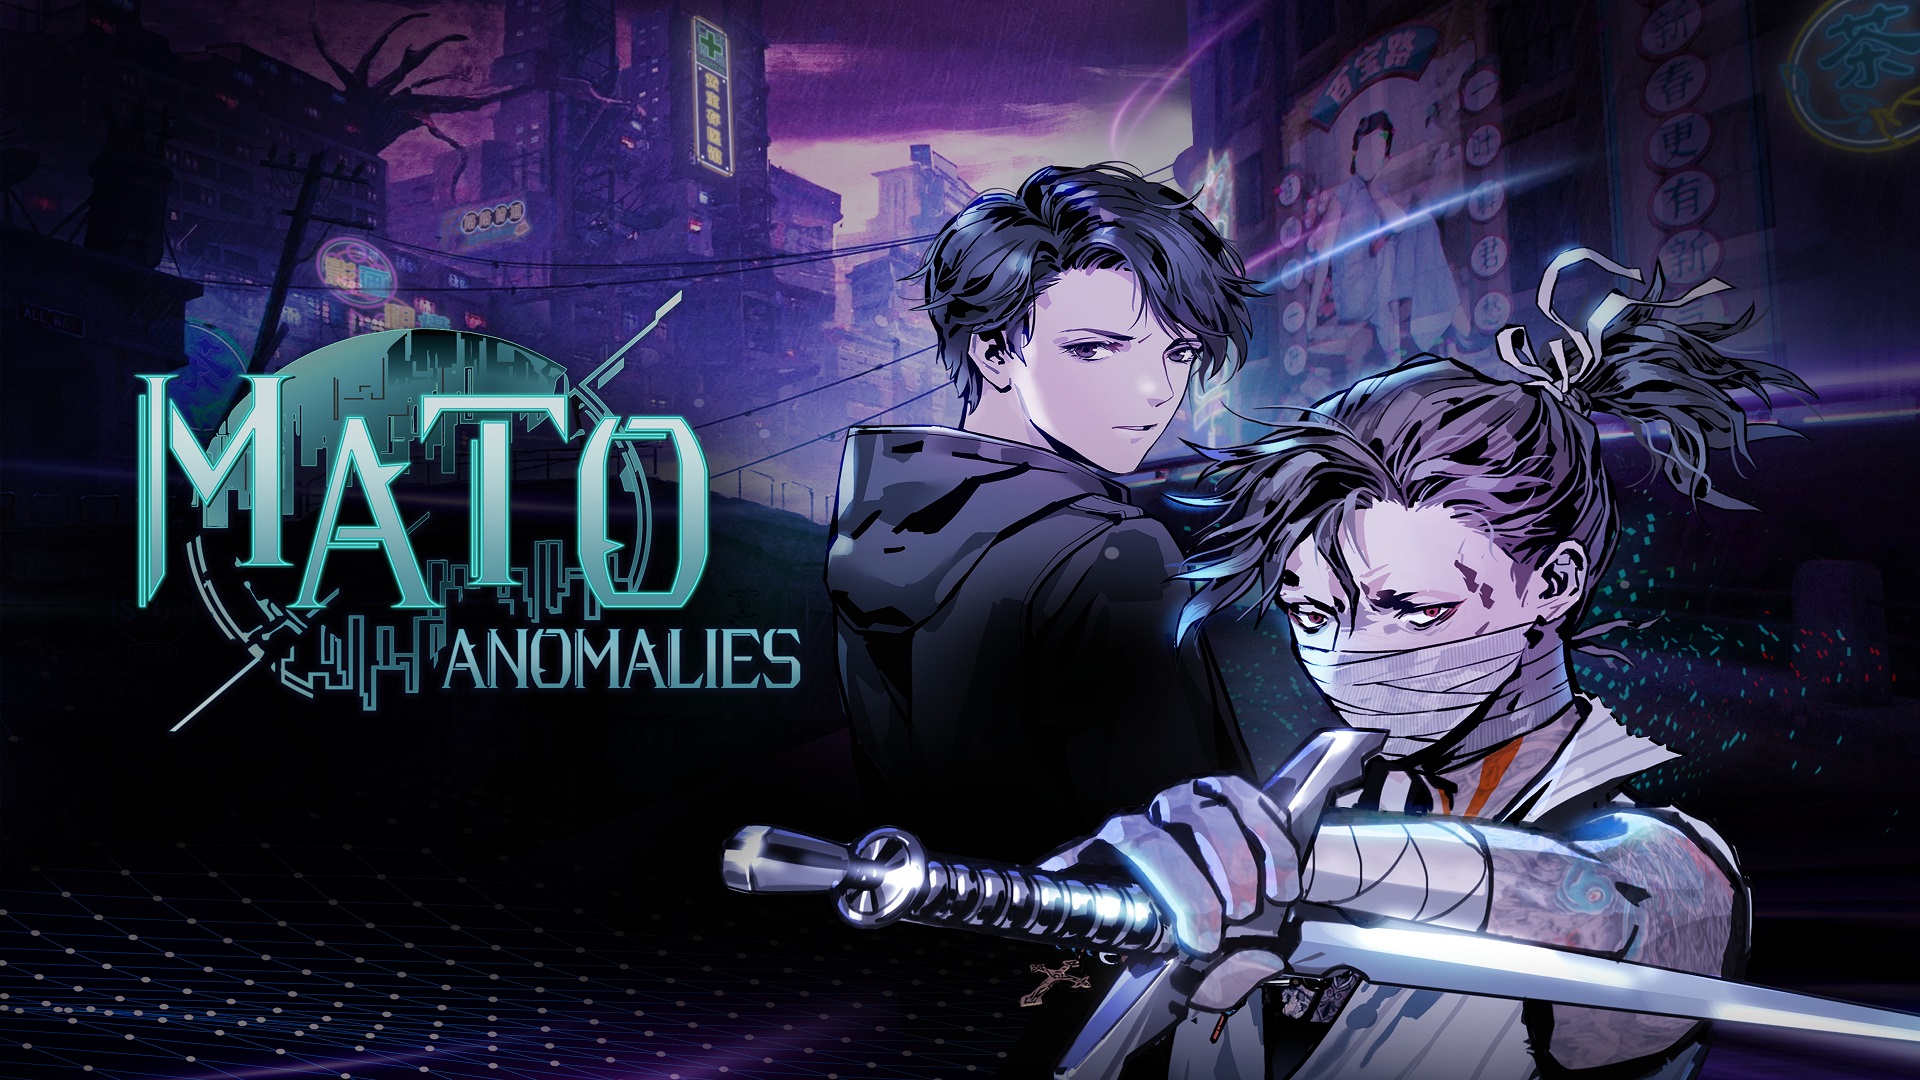 Aperçu Mato Anomalies – Un RPG à la Shin Megami Tensei intriguant mais qui doit encore faire ses preuves